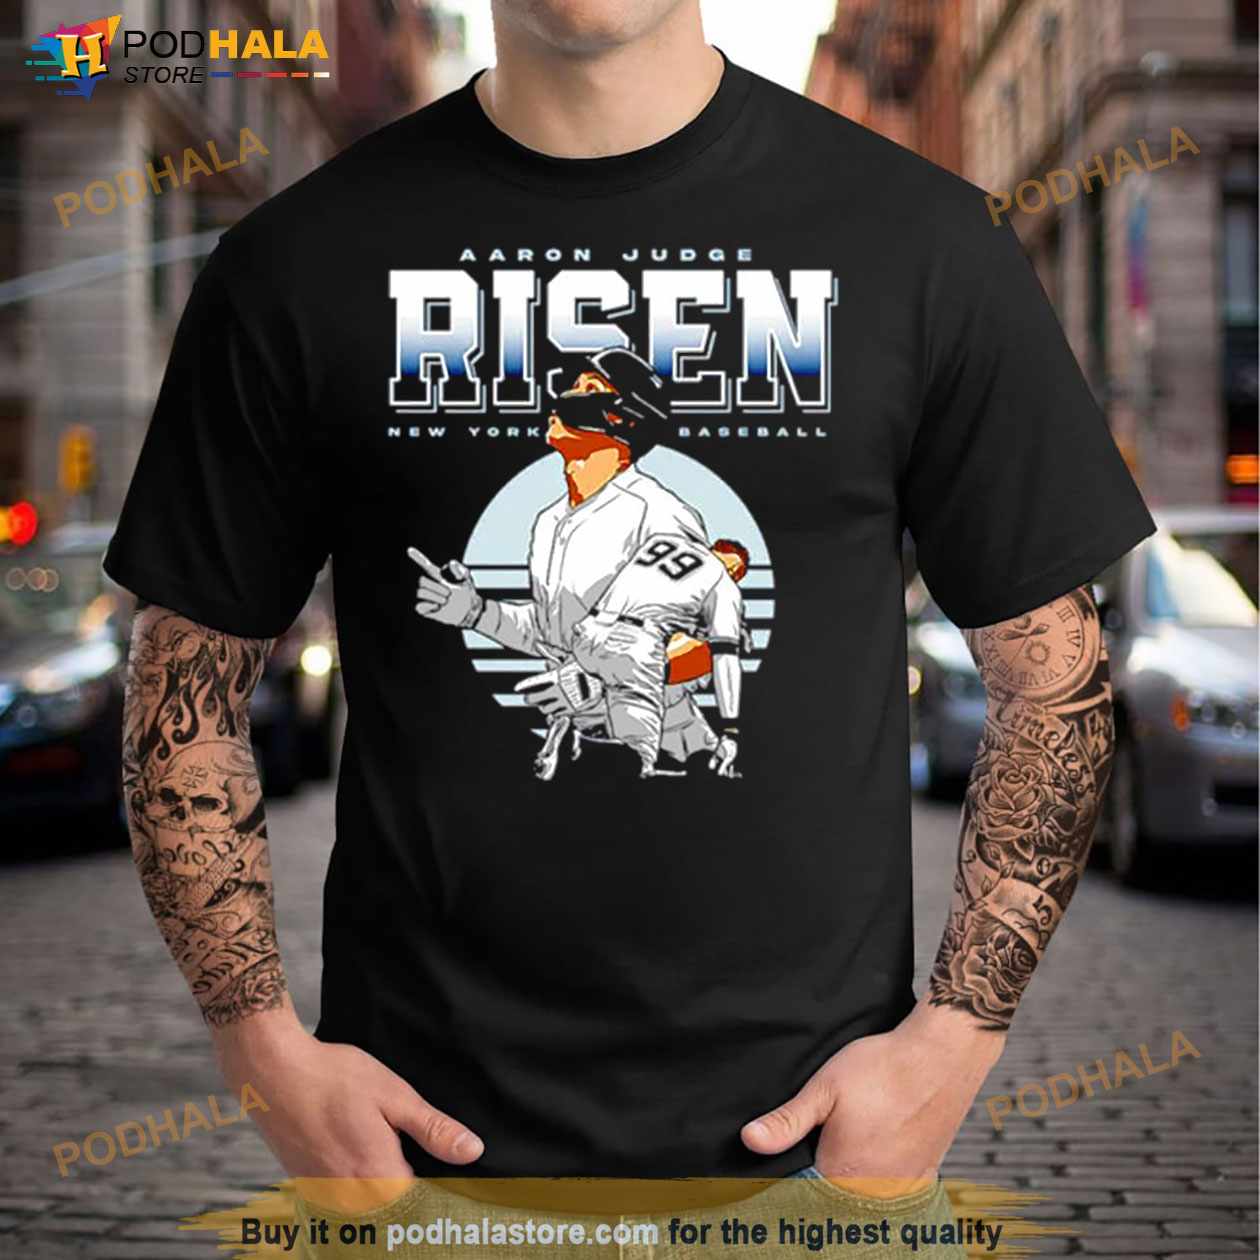 Aaron Judge Baseball Tee Shirt, New York Baseball Men's Baseball T-Shirt